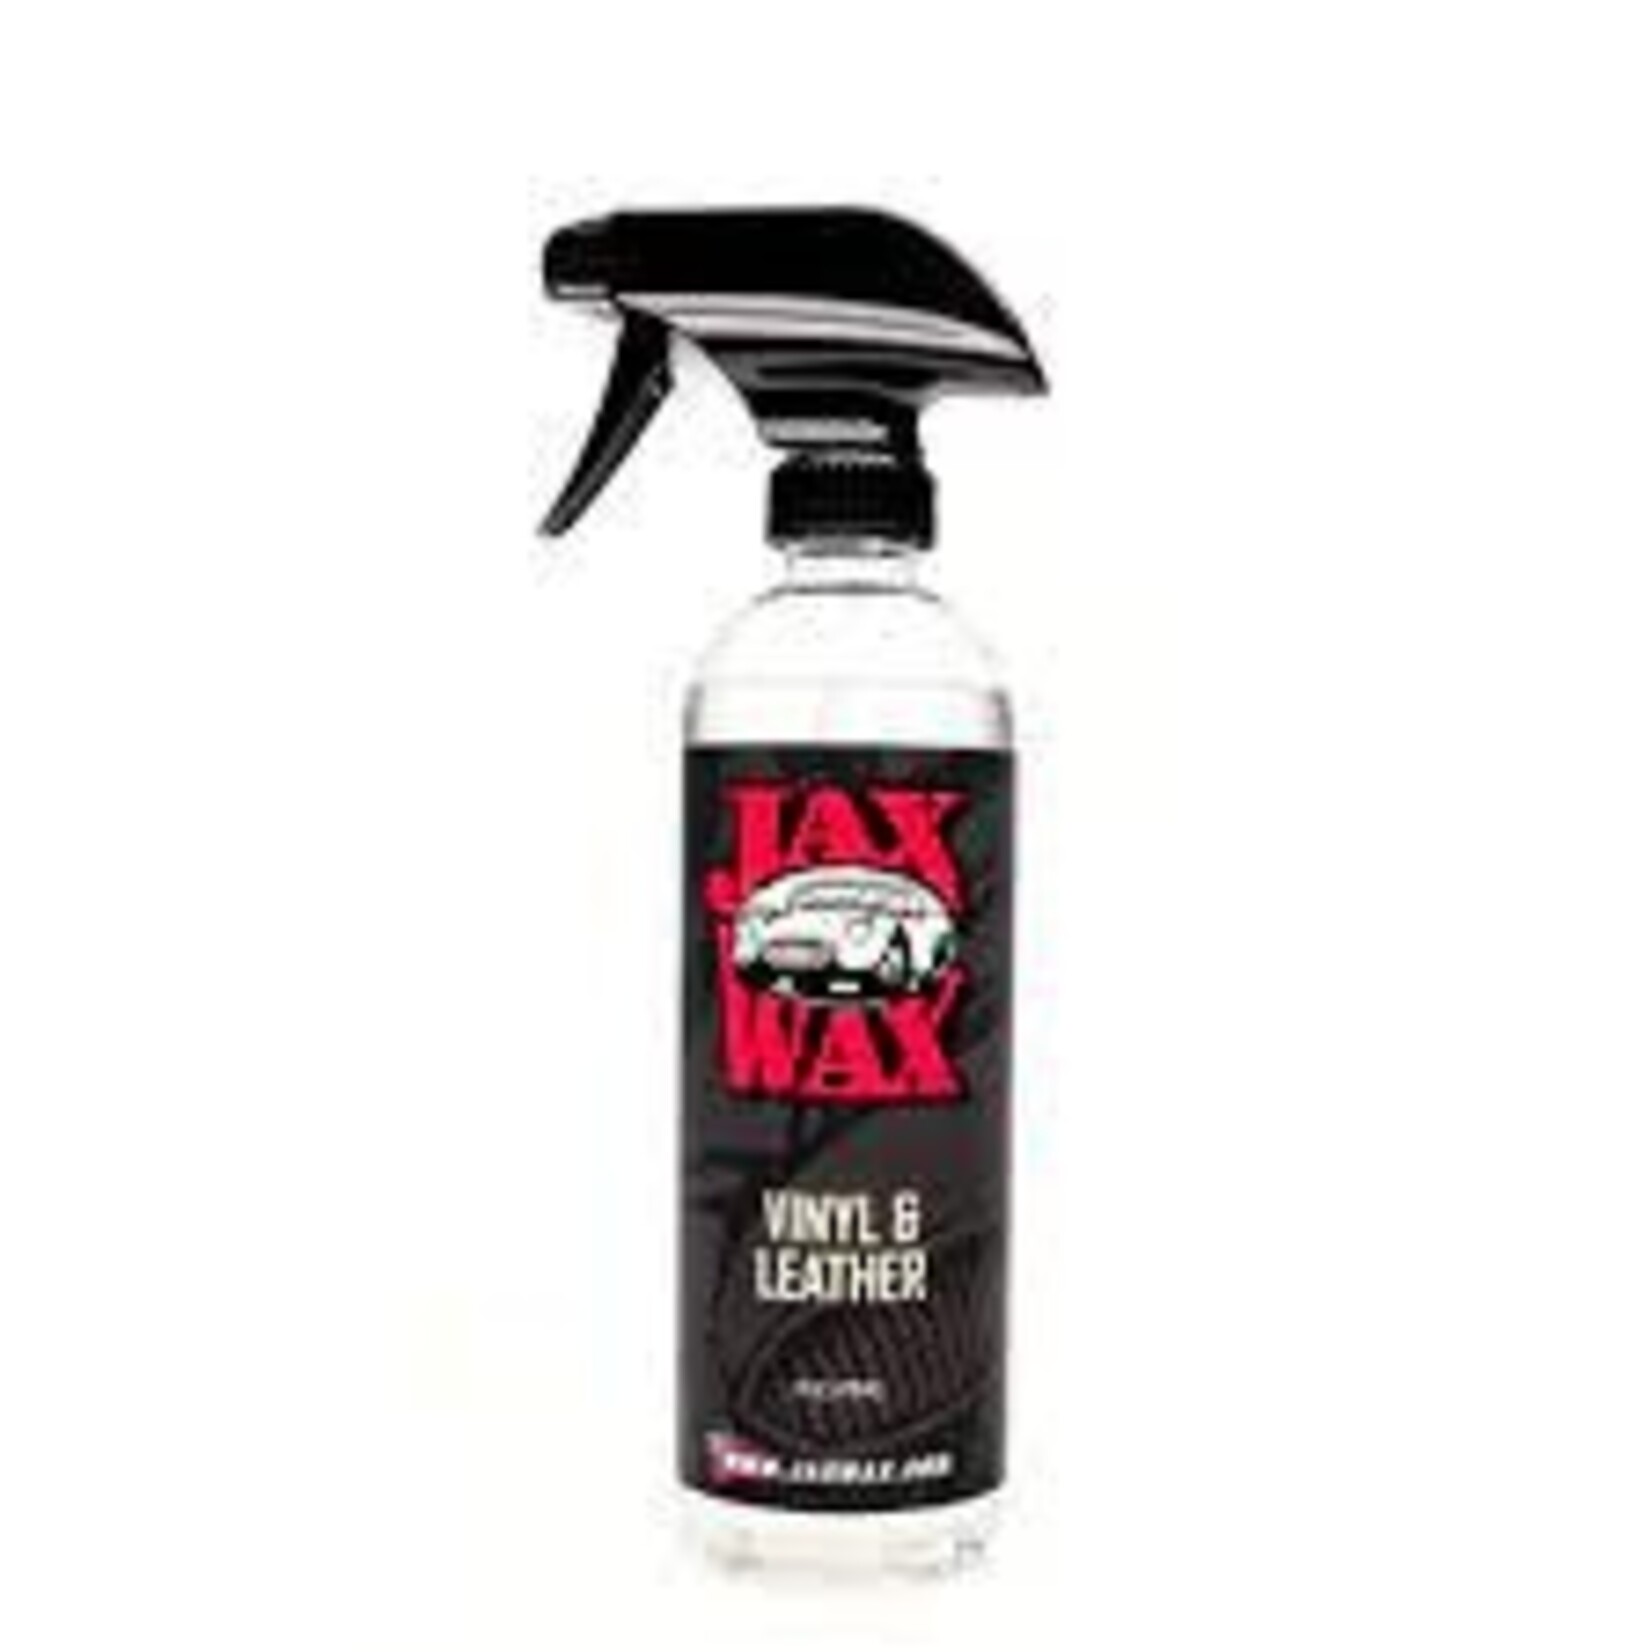 Jax Wax Vinyl & Leather Cleaner 16oz